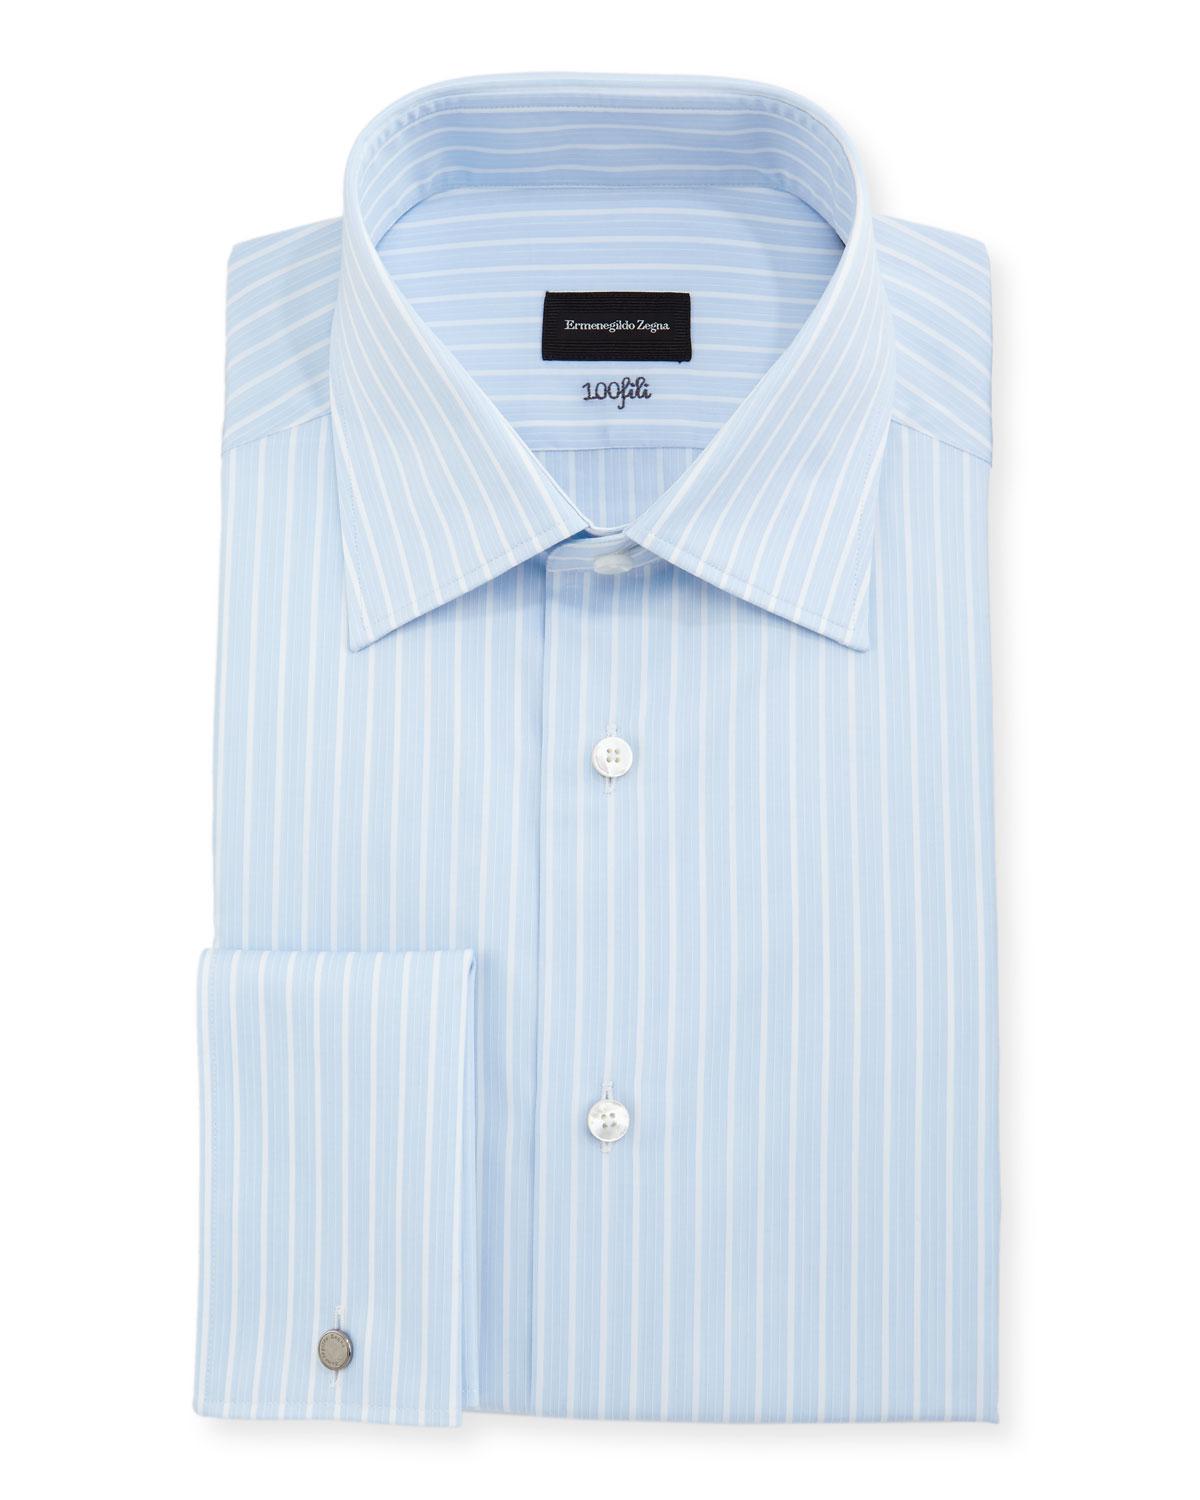 Lyst - Ermenegildo Zegna 100fili Striped Cotton Dress Shirt in Blue for Men